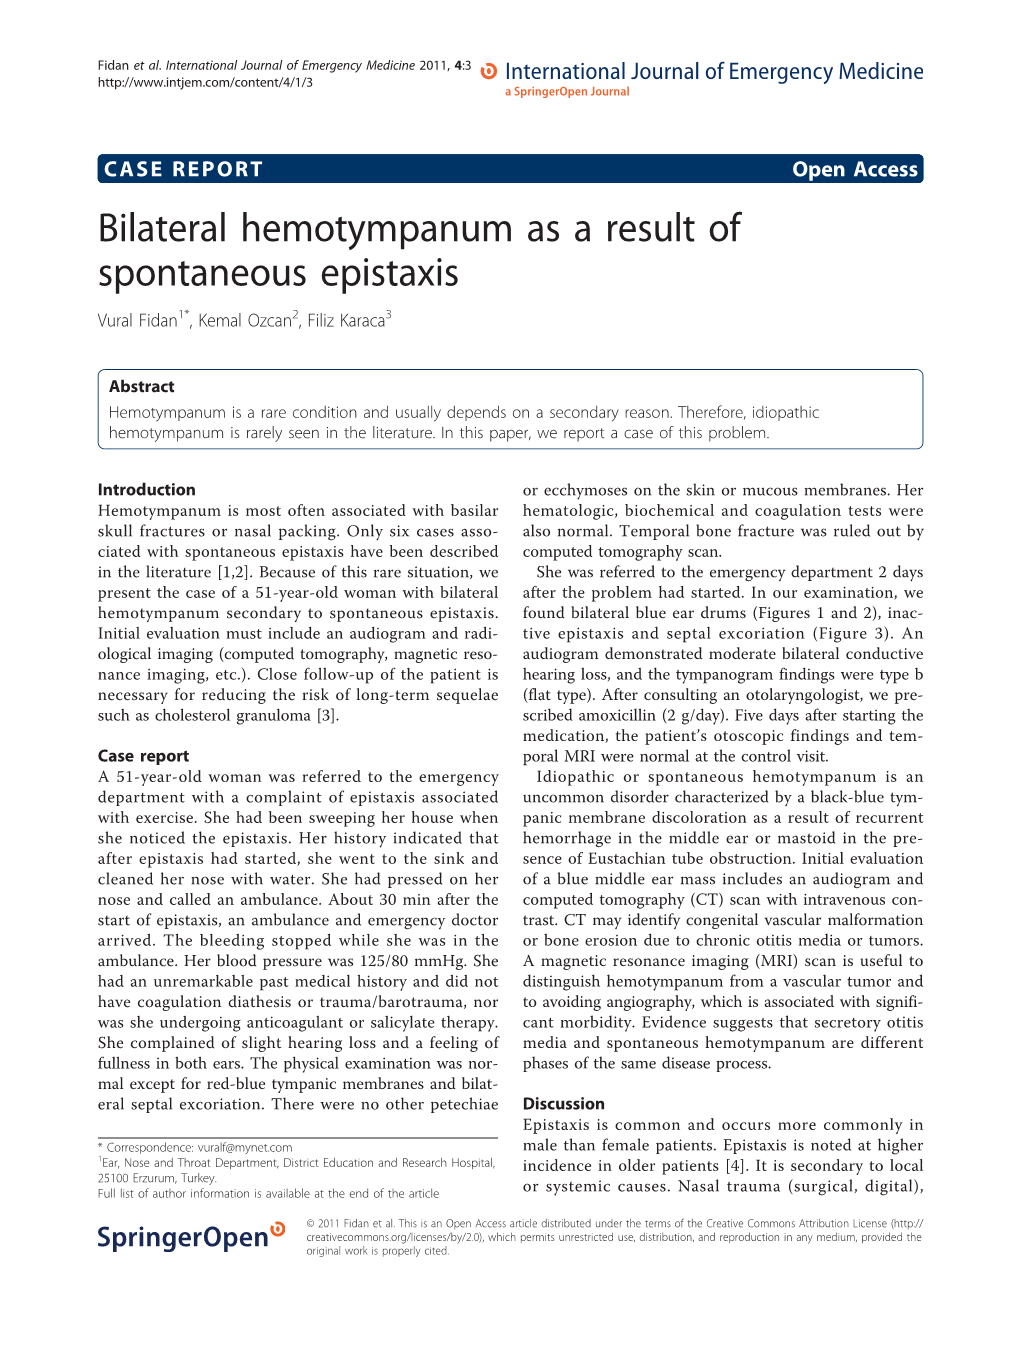 Bilateral Hemotympanum As a Result of Spontaneous Epistaxis Vural Fidan1*, Kemal Ozcan2, Filiz Karaca3